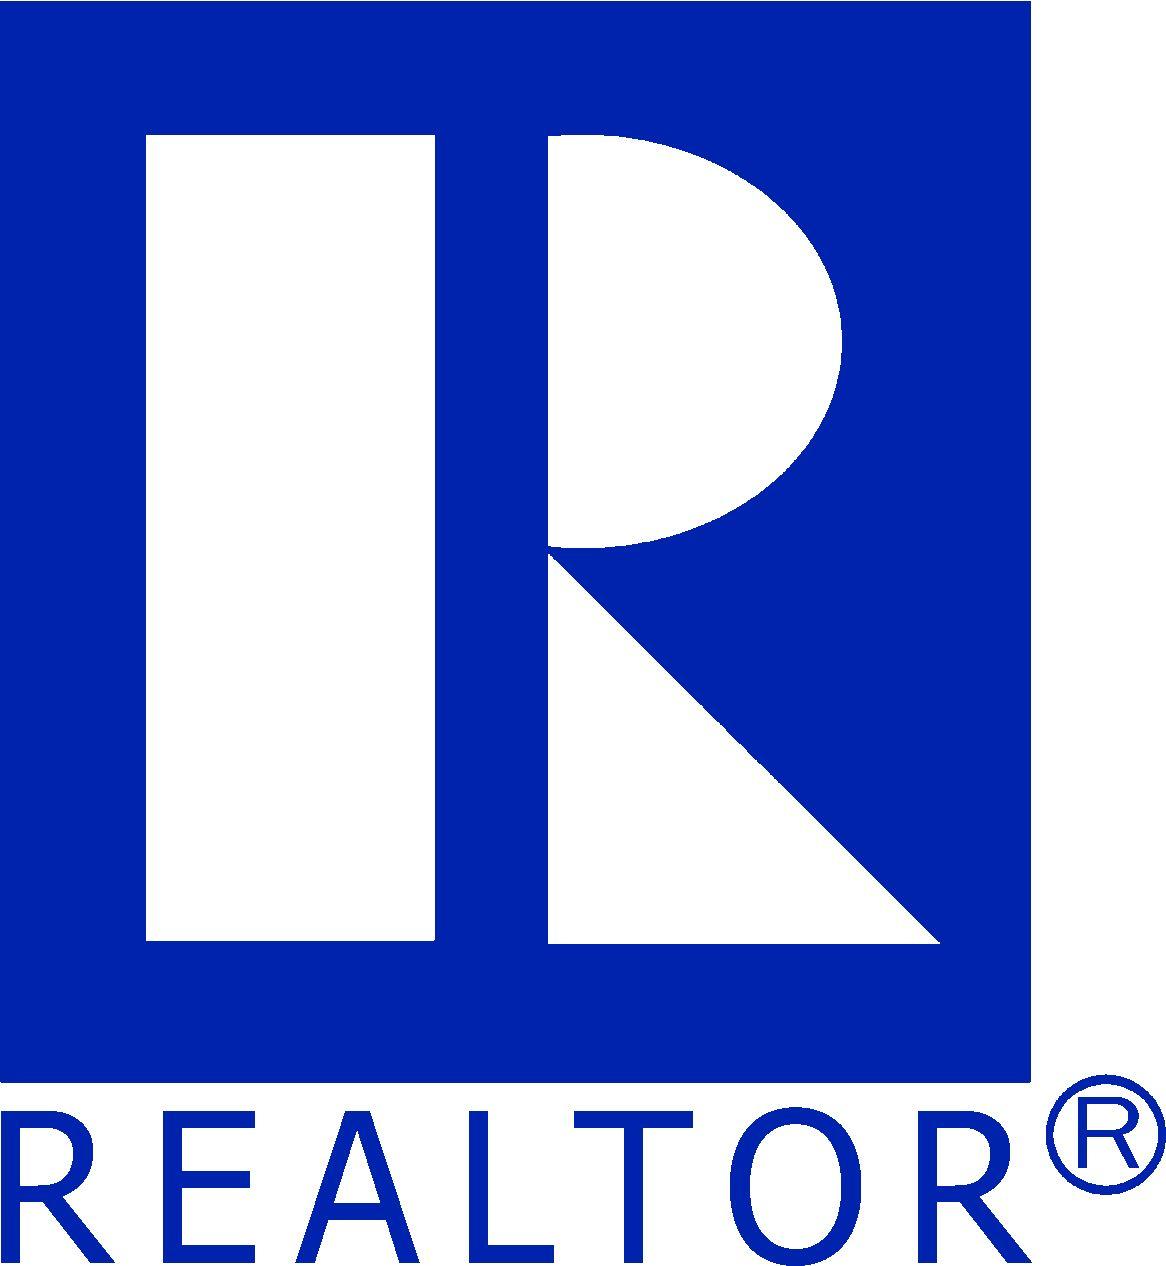 Realter Logo - Downloadable Real Estate Industry Logos - Wisconsin REALTORS ...